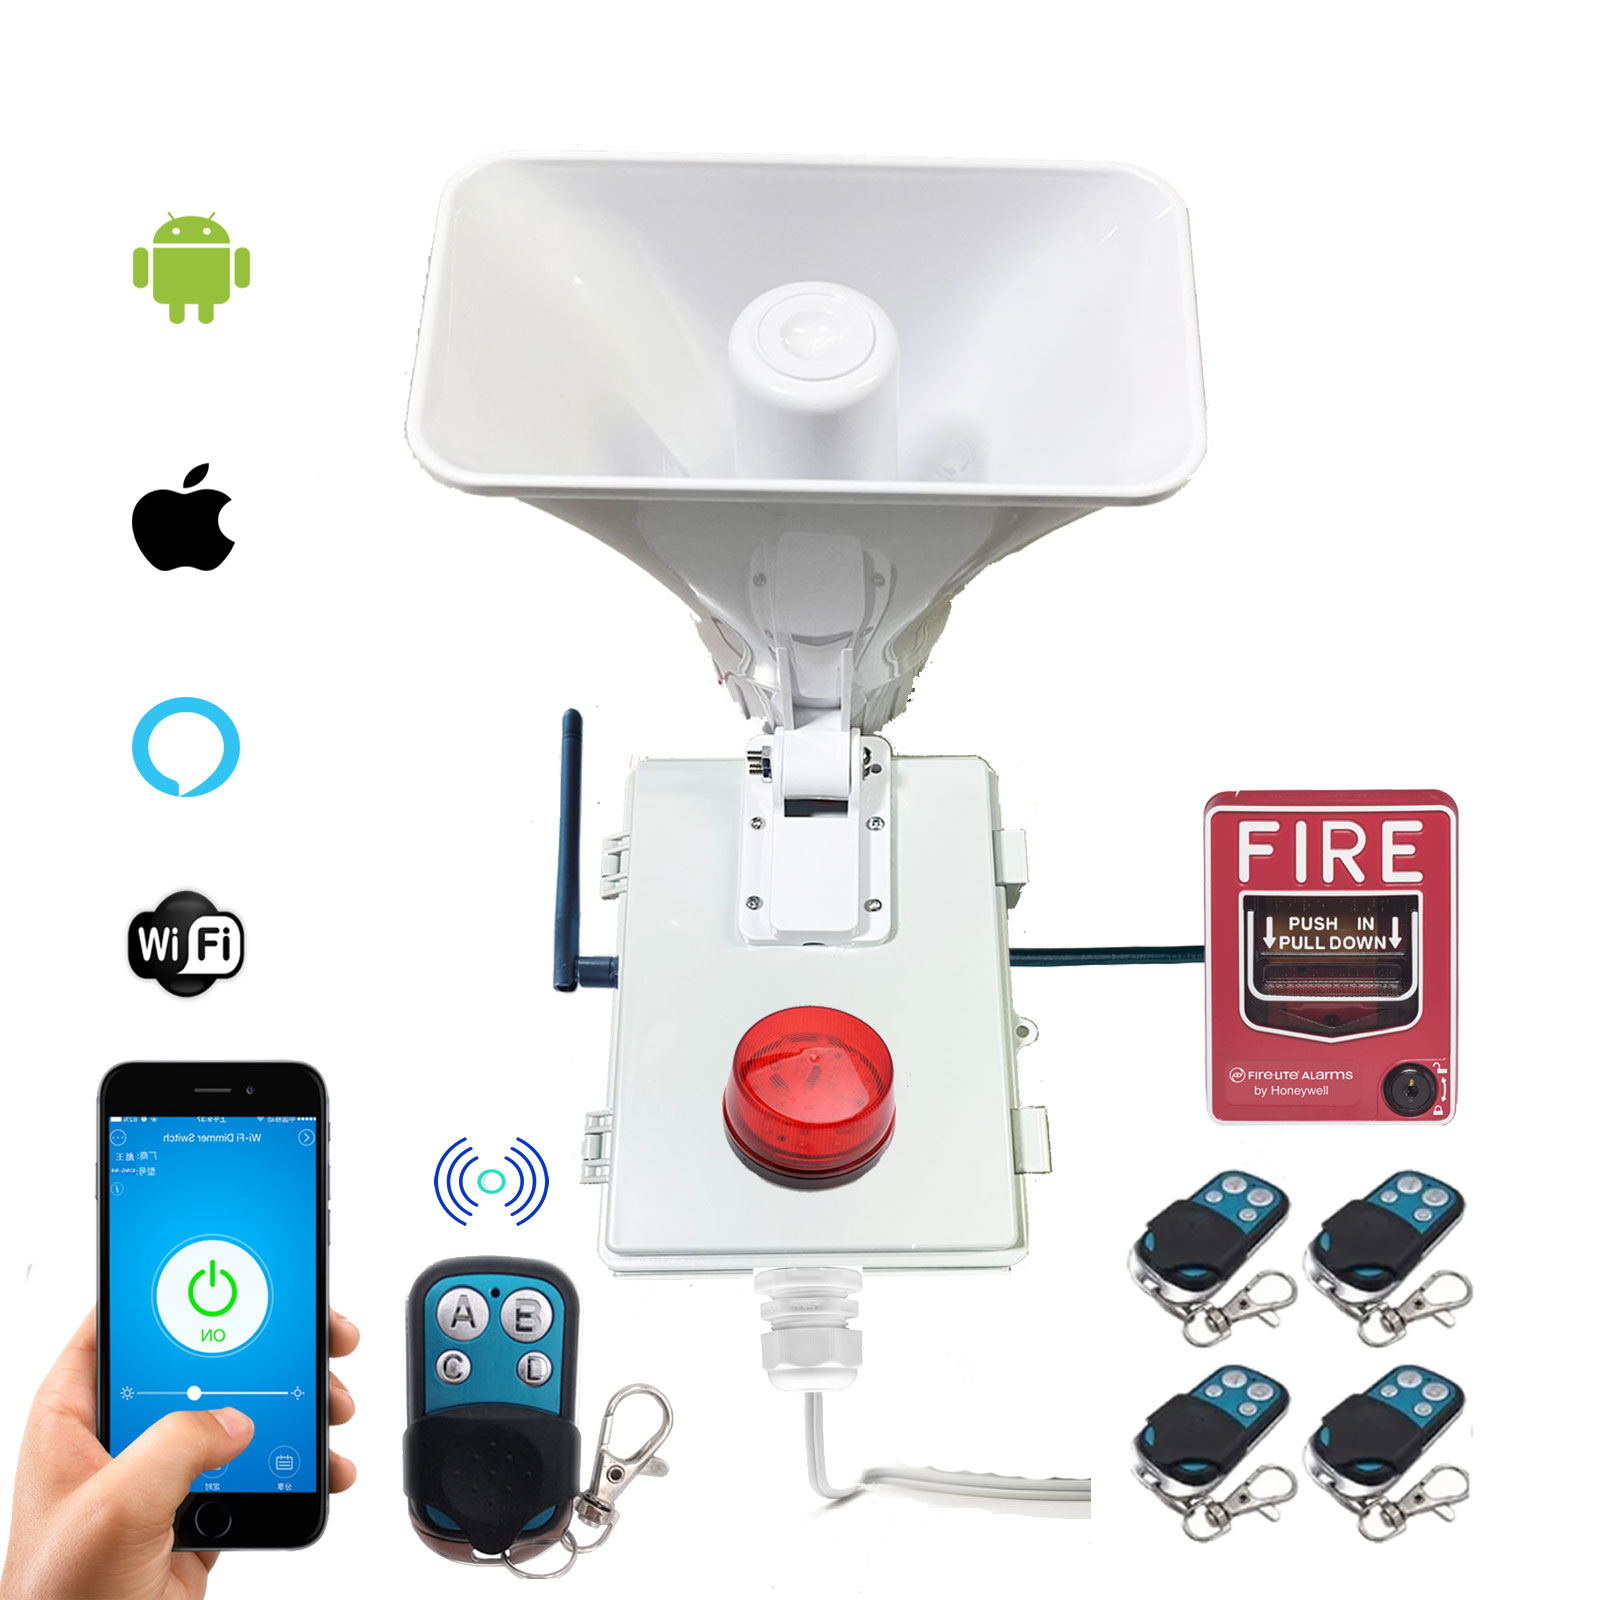 Alarma Vecinal Wifi Rf 433 Mhz Boton Fire App Android Ios